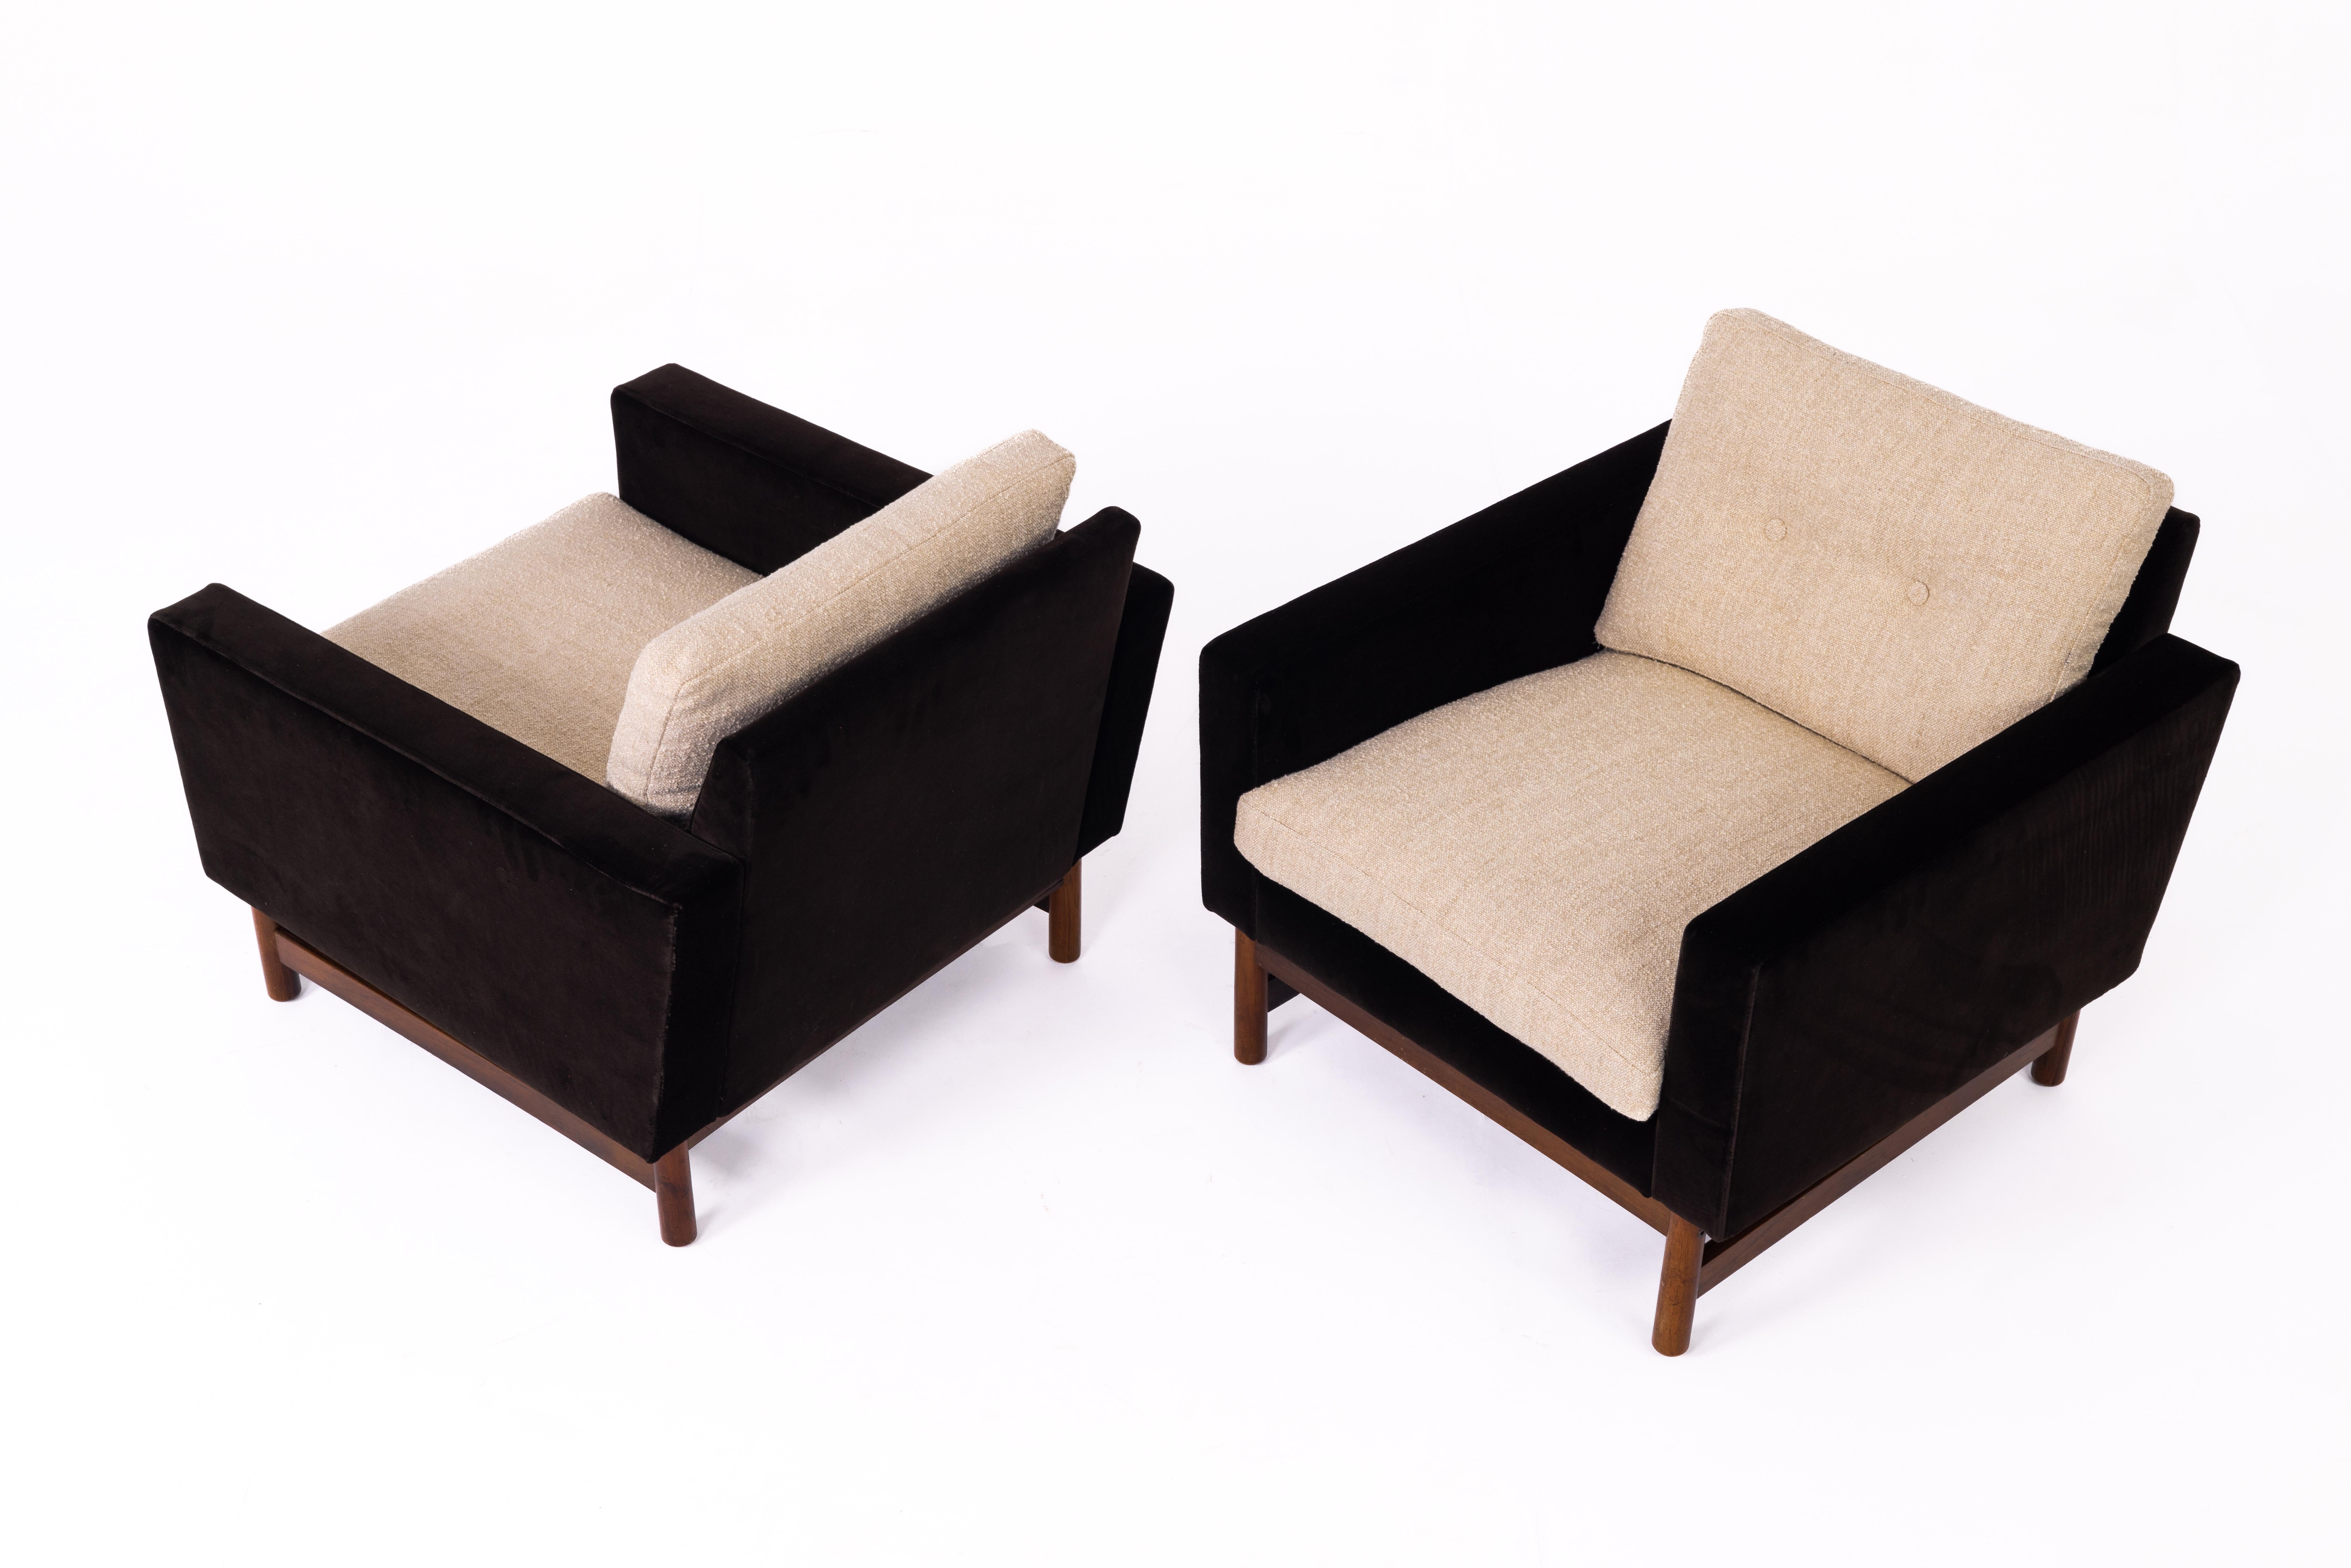 Pair of Swedish armchairs, 1960s, entirely restored and reupholstered in dark brown Dedar velvet (Adamo&Eva), cushions in boccette by Nobilis (Stella), legs in rosewood.